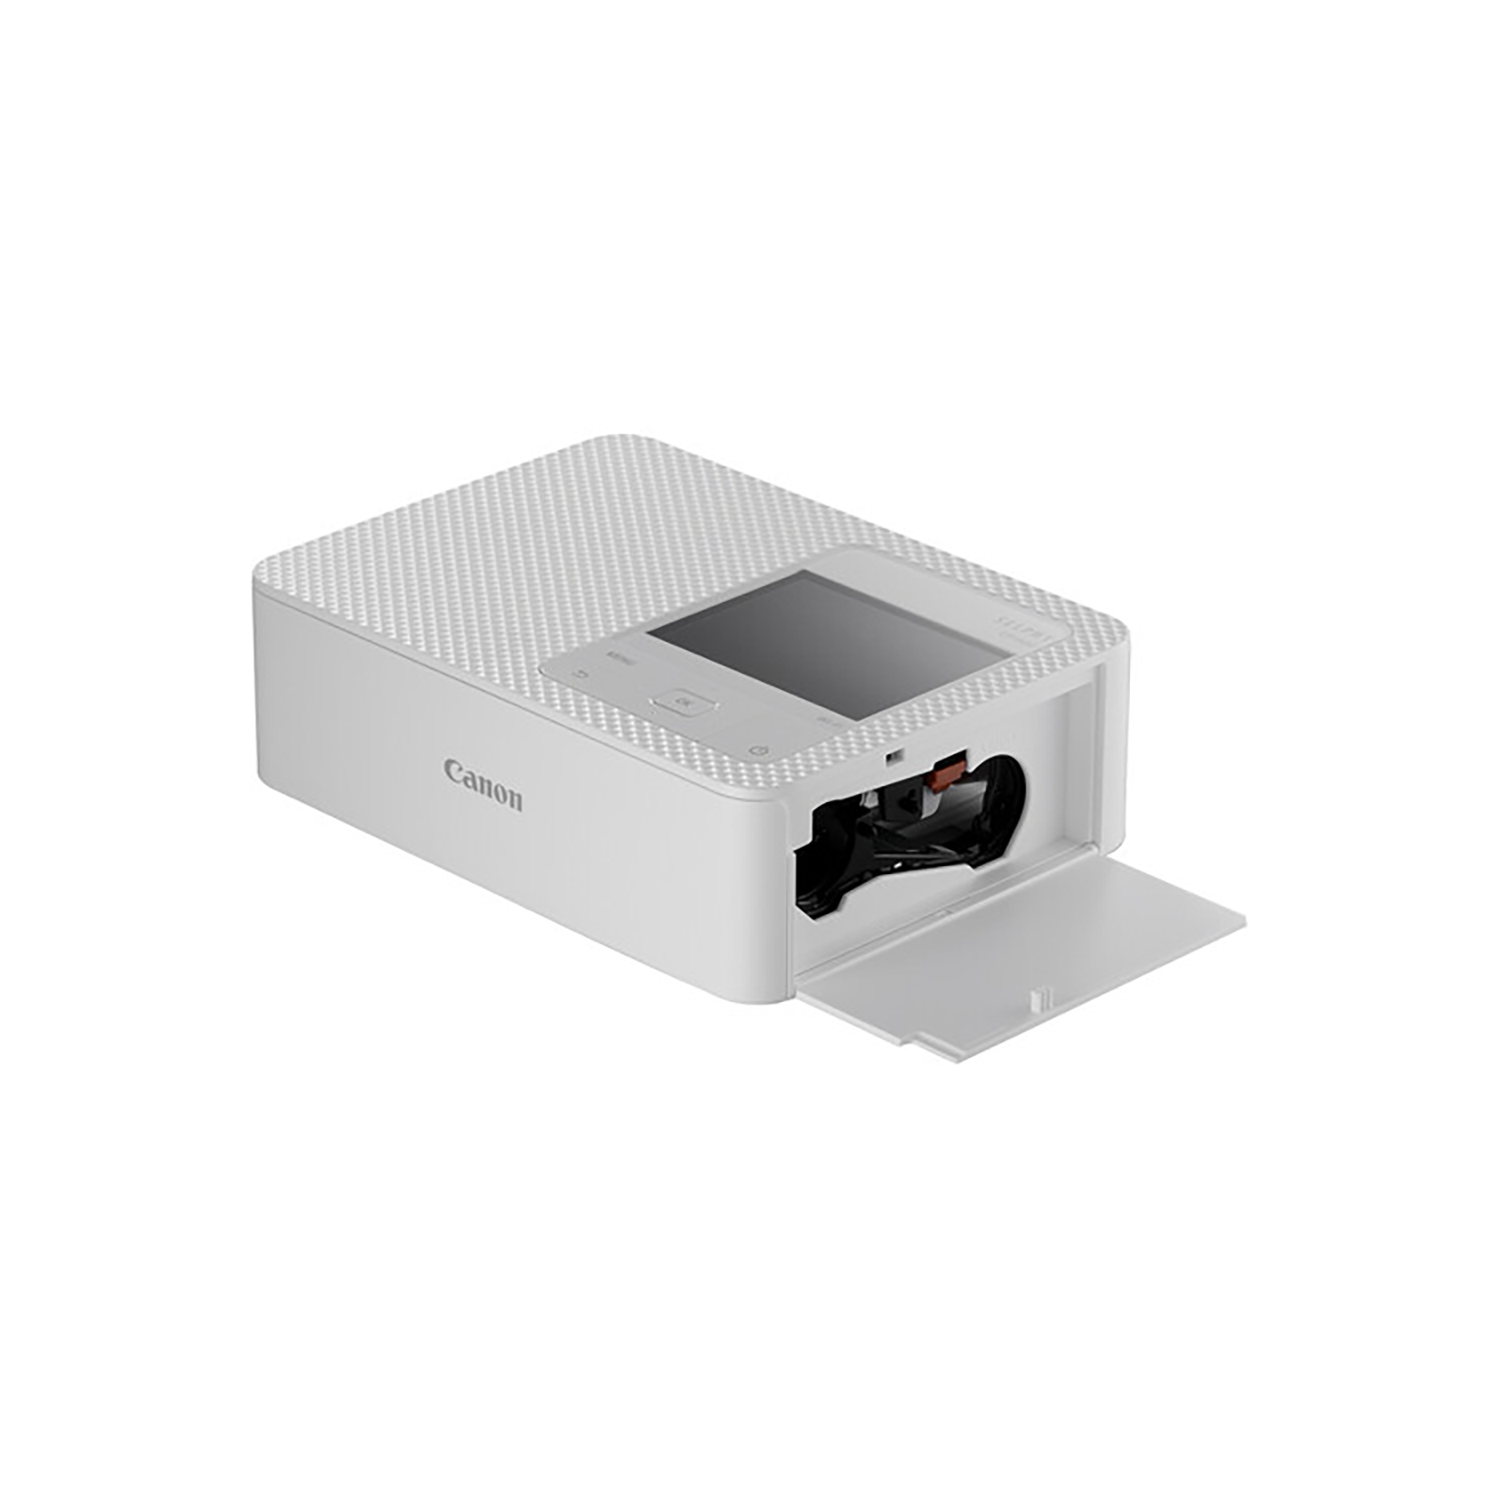 Canon SELPHY CP1500 Compact Photo Printer (White) 5540C002